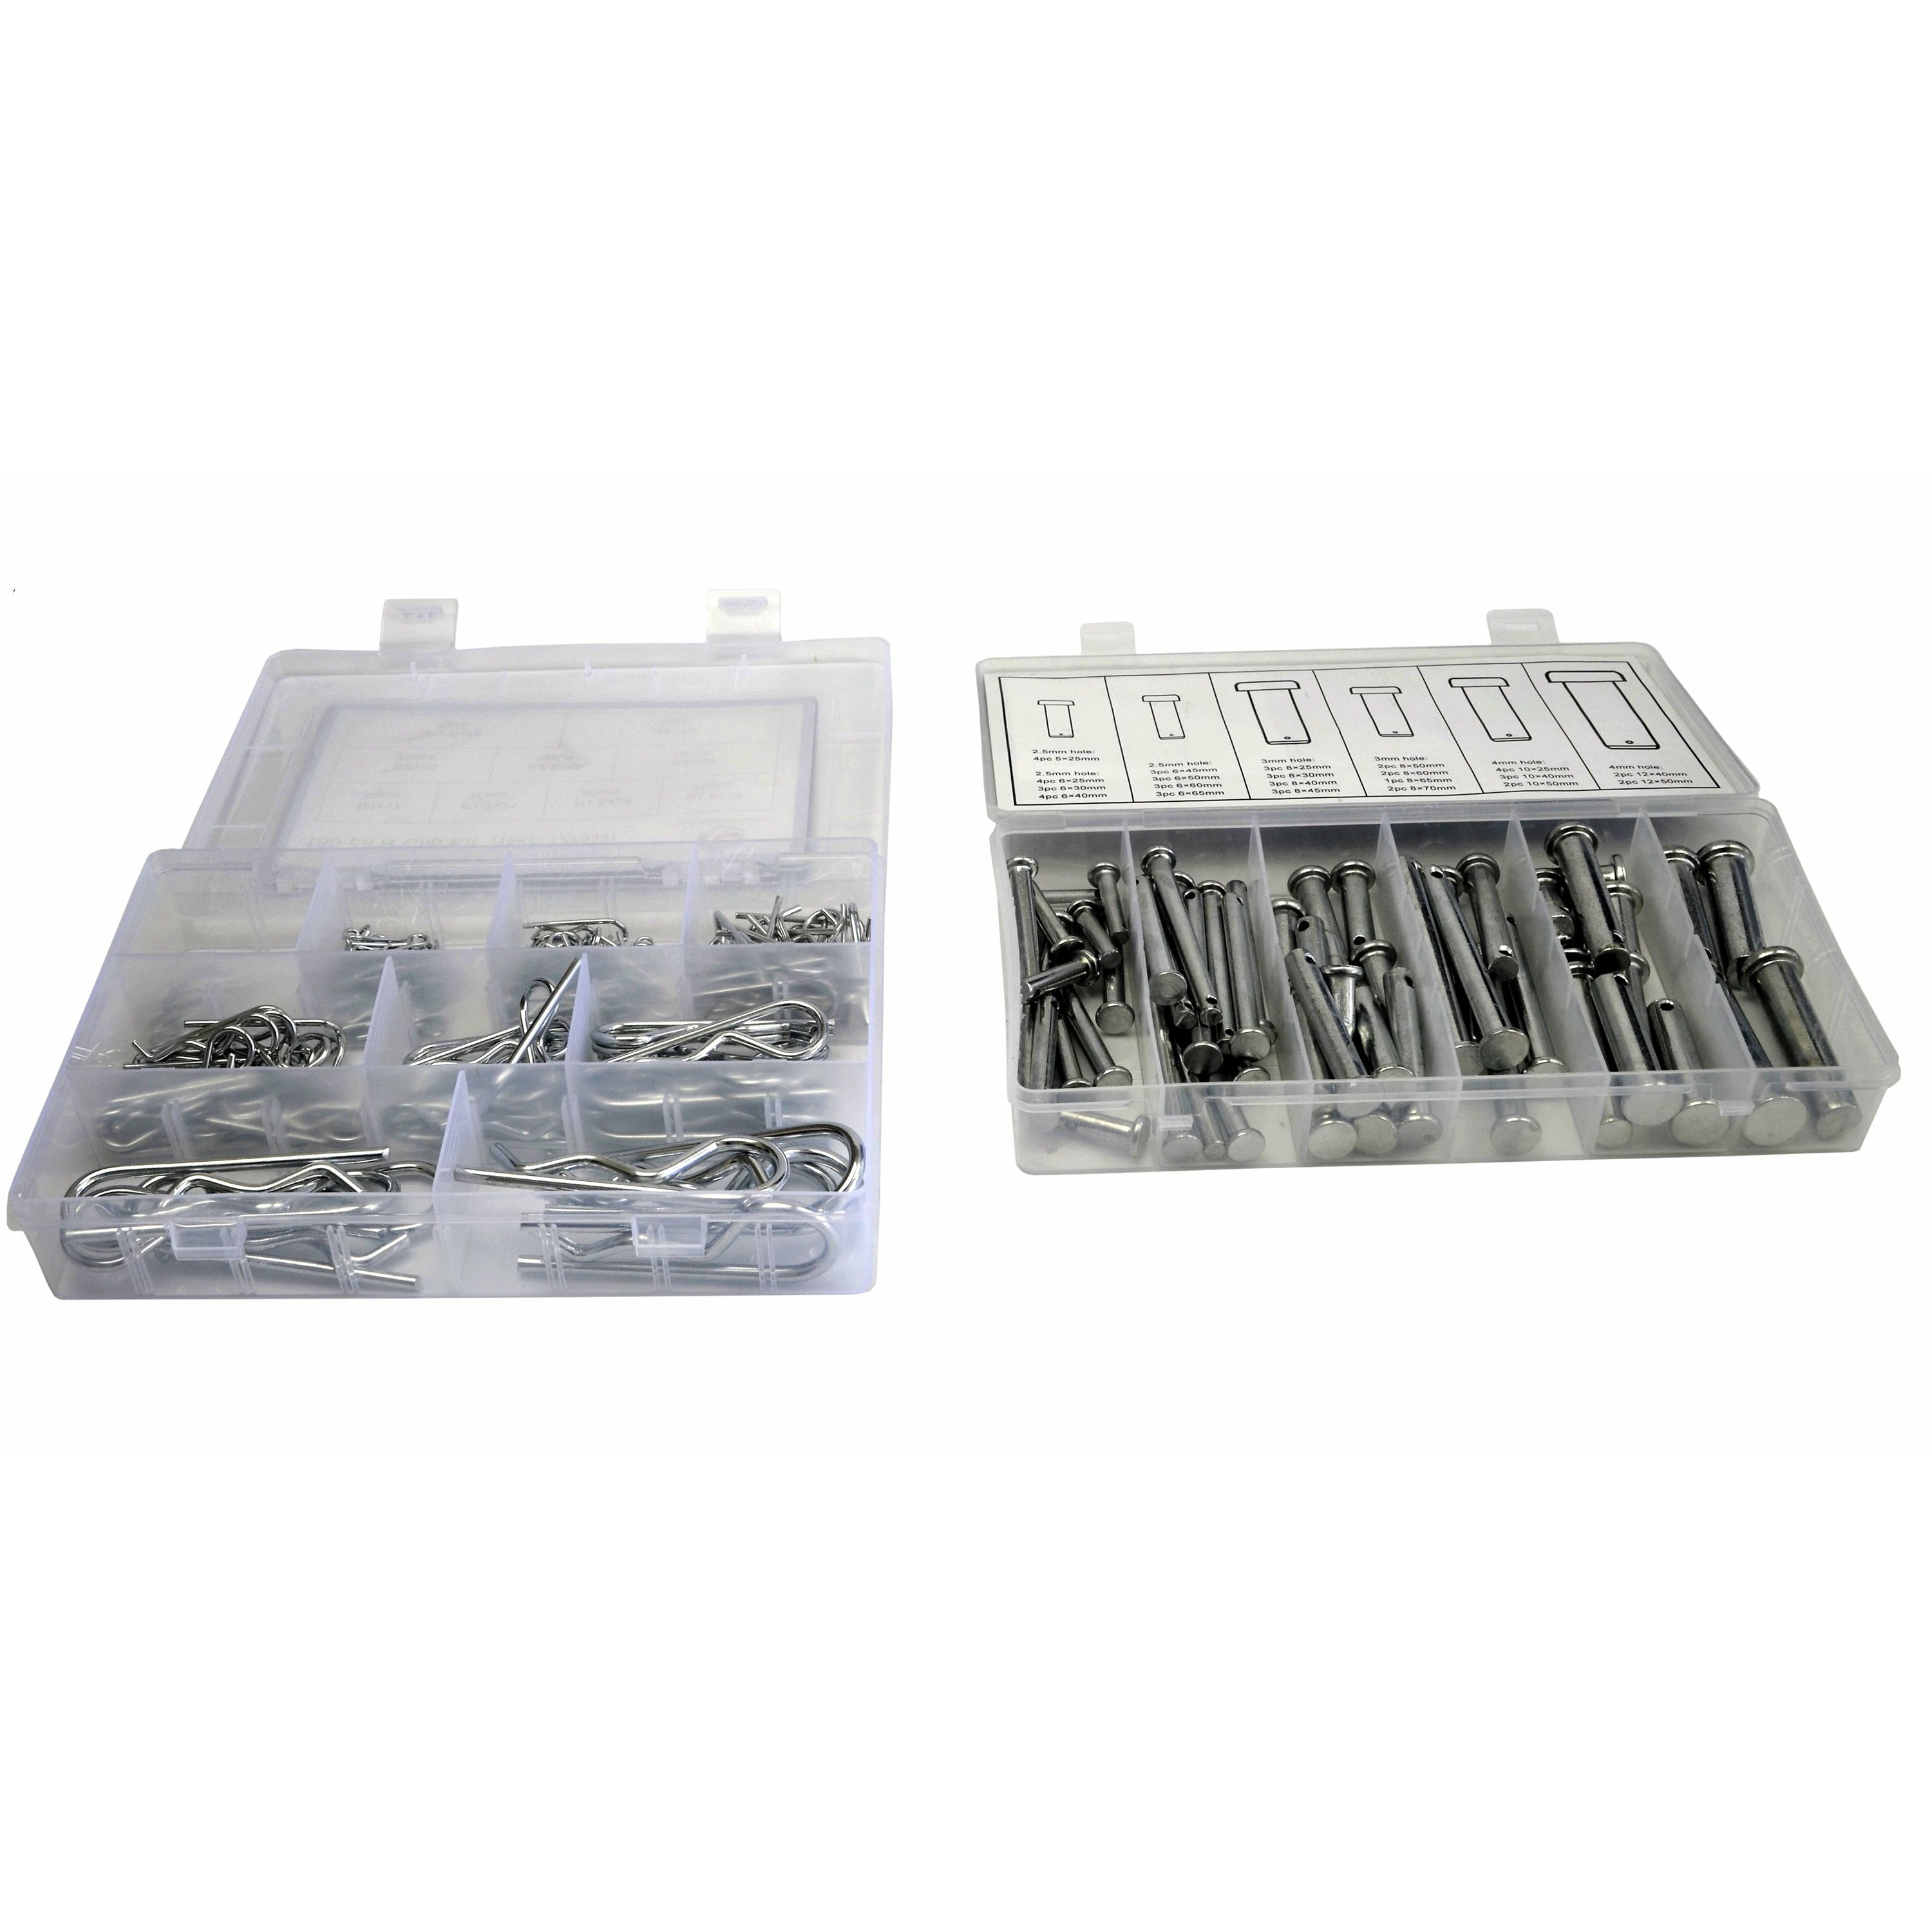  60 Piece Clevis Pin Kit & 150 Piece Metric R Pin Clip Grab Kit Assortment